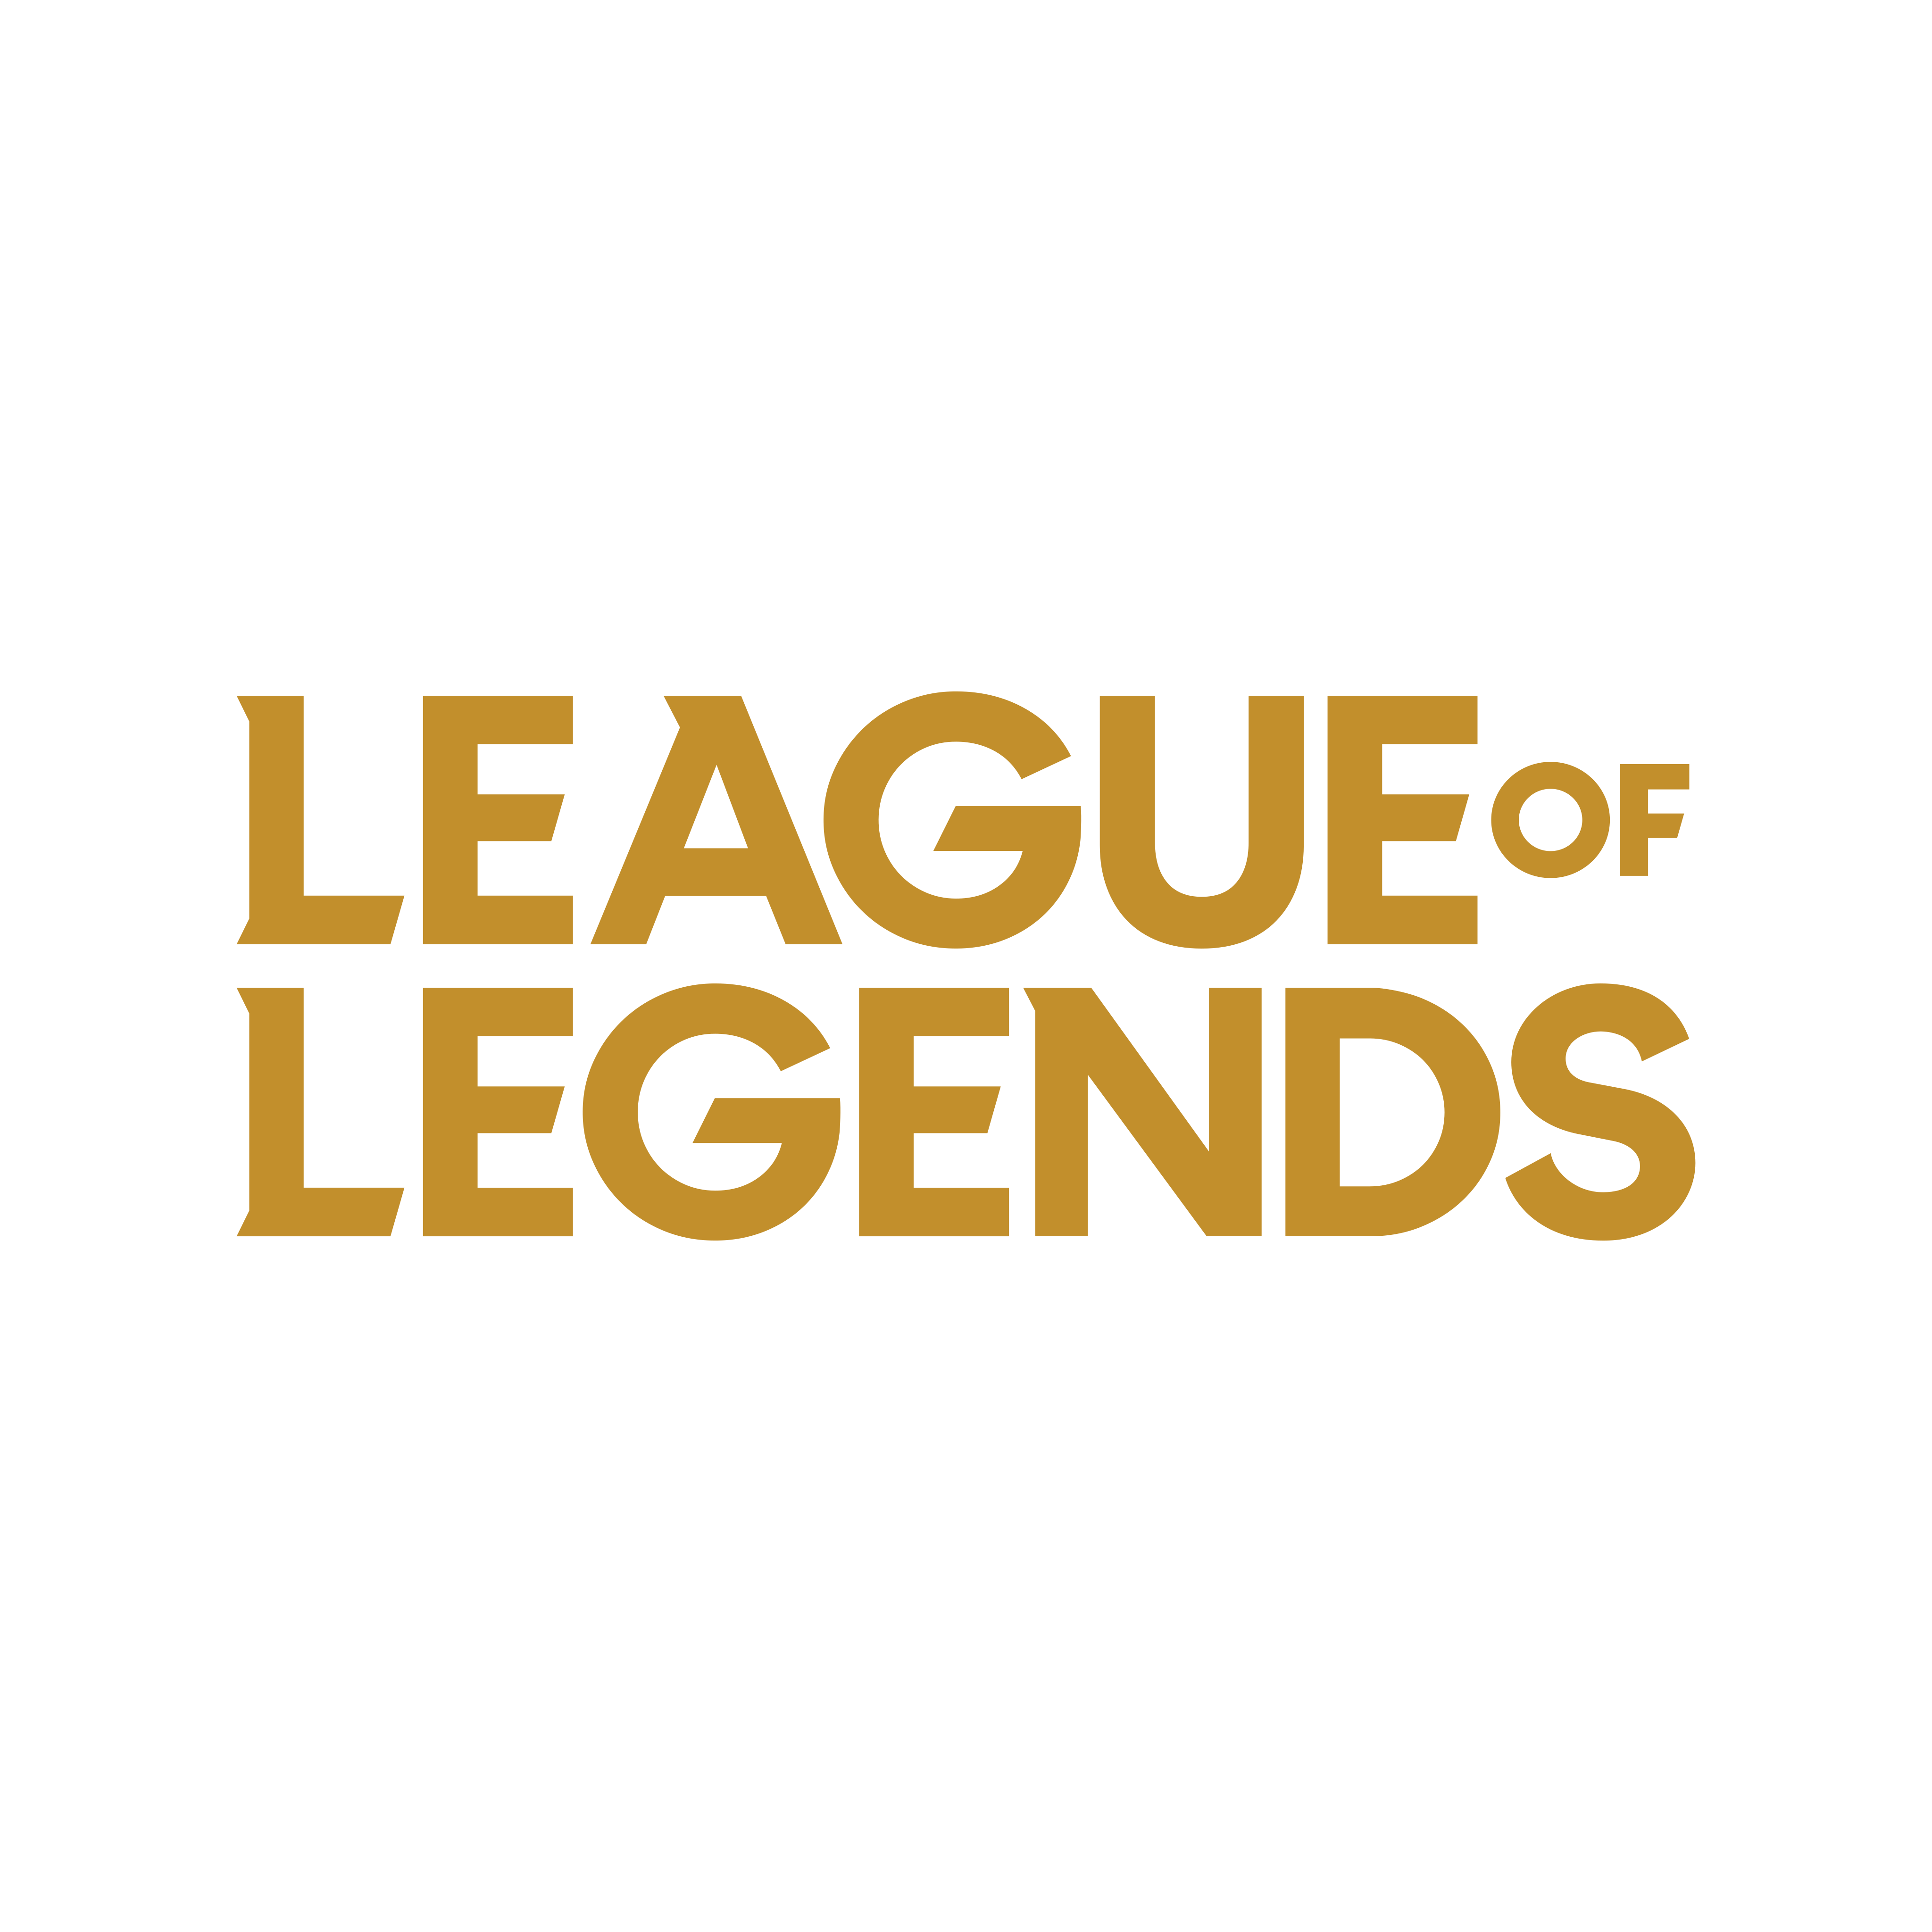 League Of Legends Logo PNG Picture